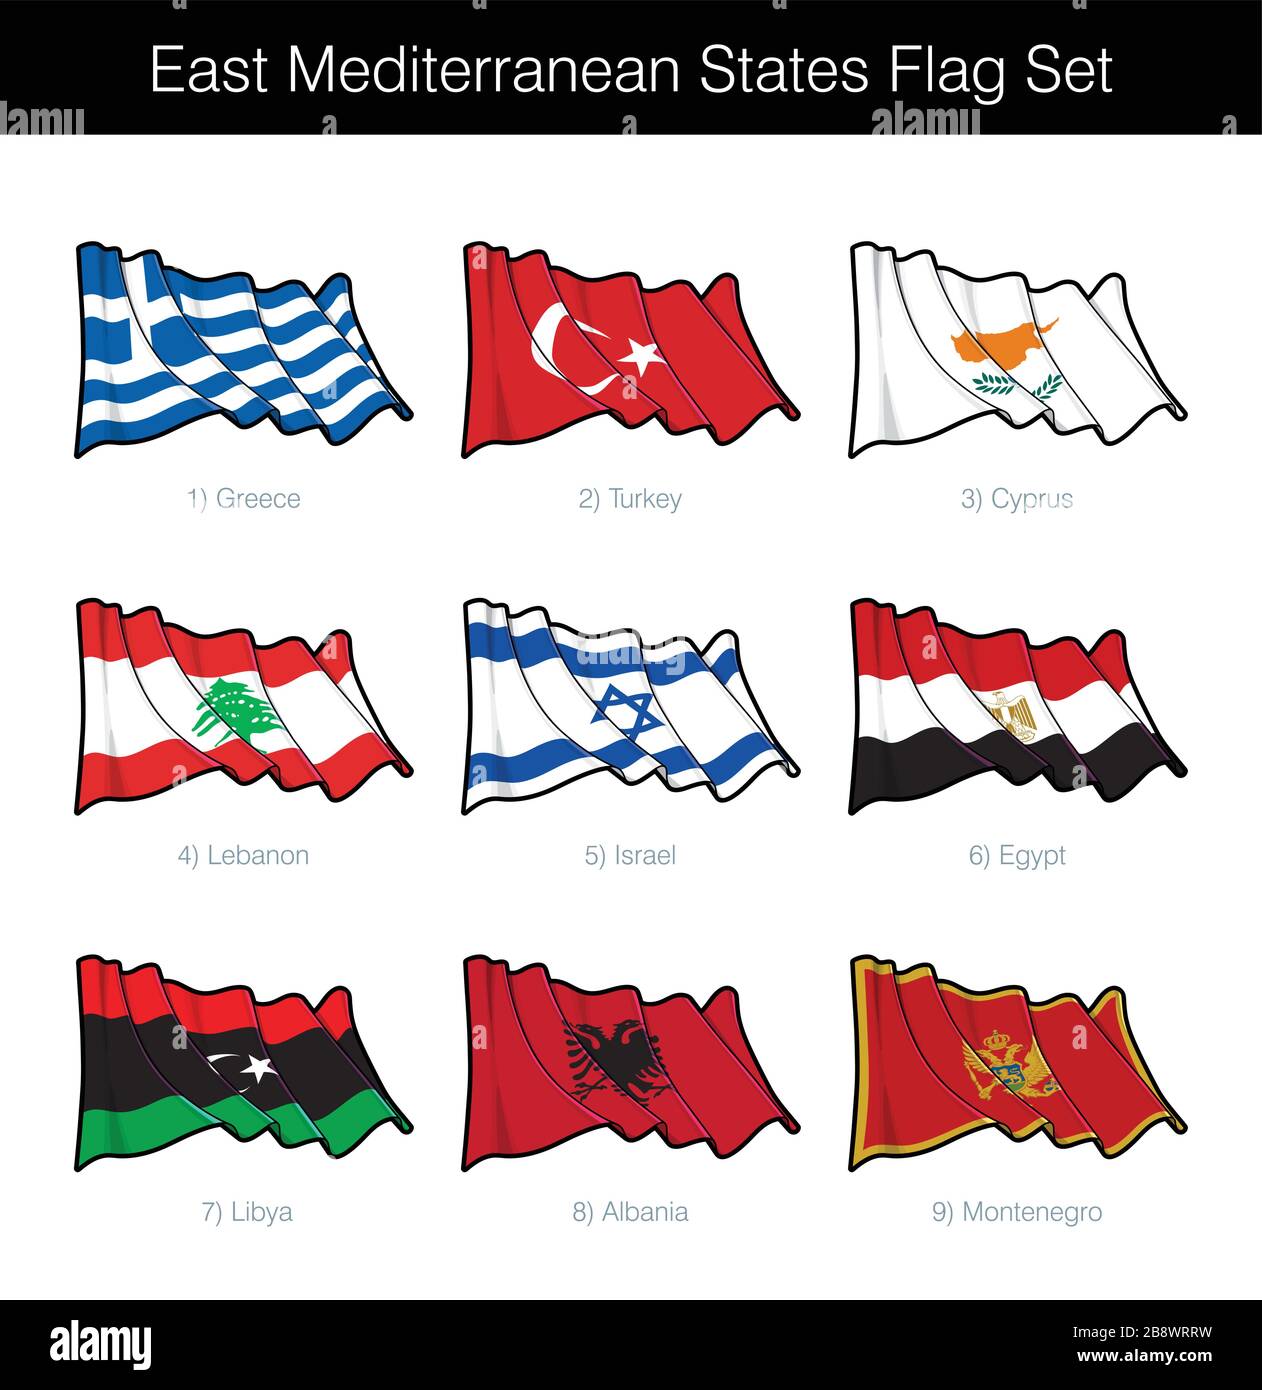 East Mediterranean States Waving Flag Set. The set includes the flags of Greece, Turkey, Cyprus, Lebanon, Israel, Egypt, Libya, Albania and Montenegro Stock Vector